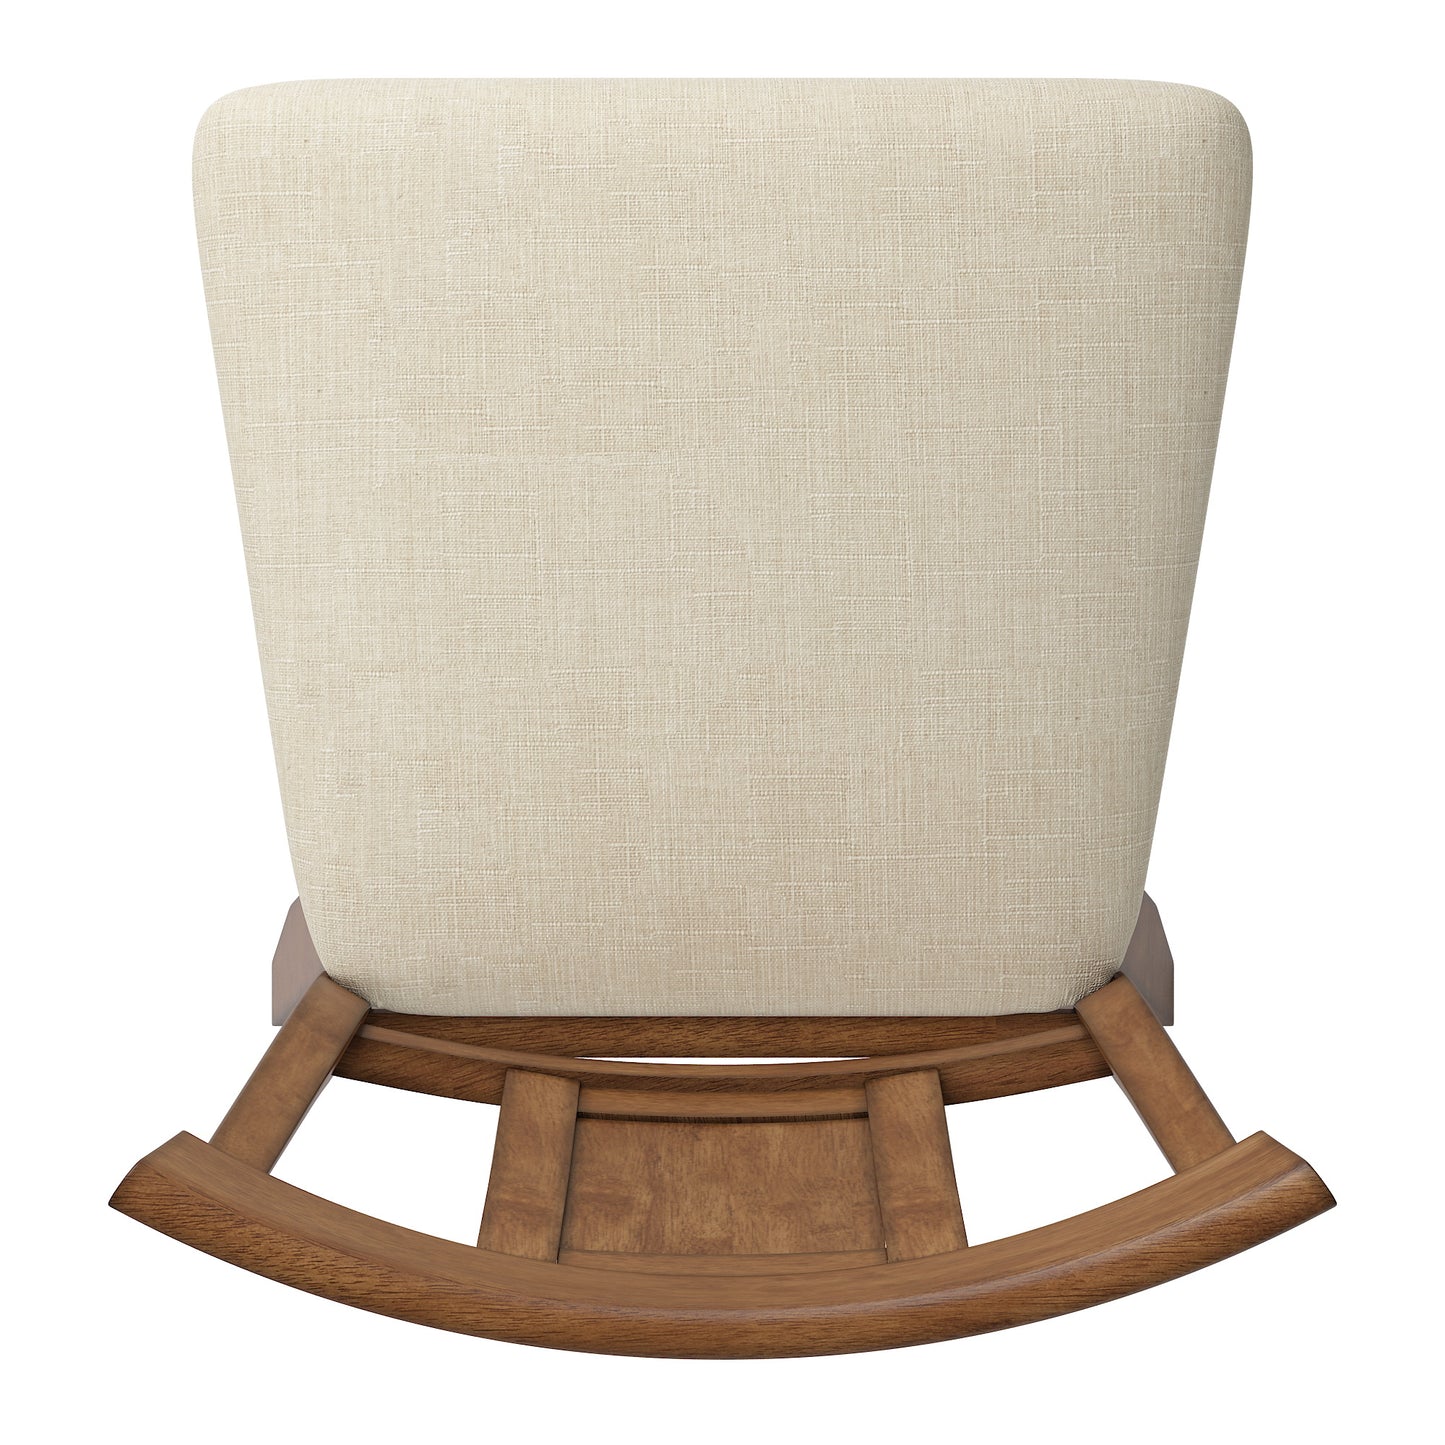 Panel Back Counter Height Wood Swivel Chair - Oak Finish